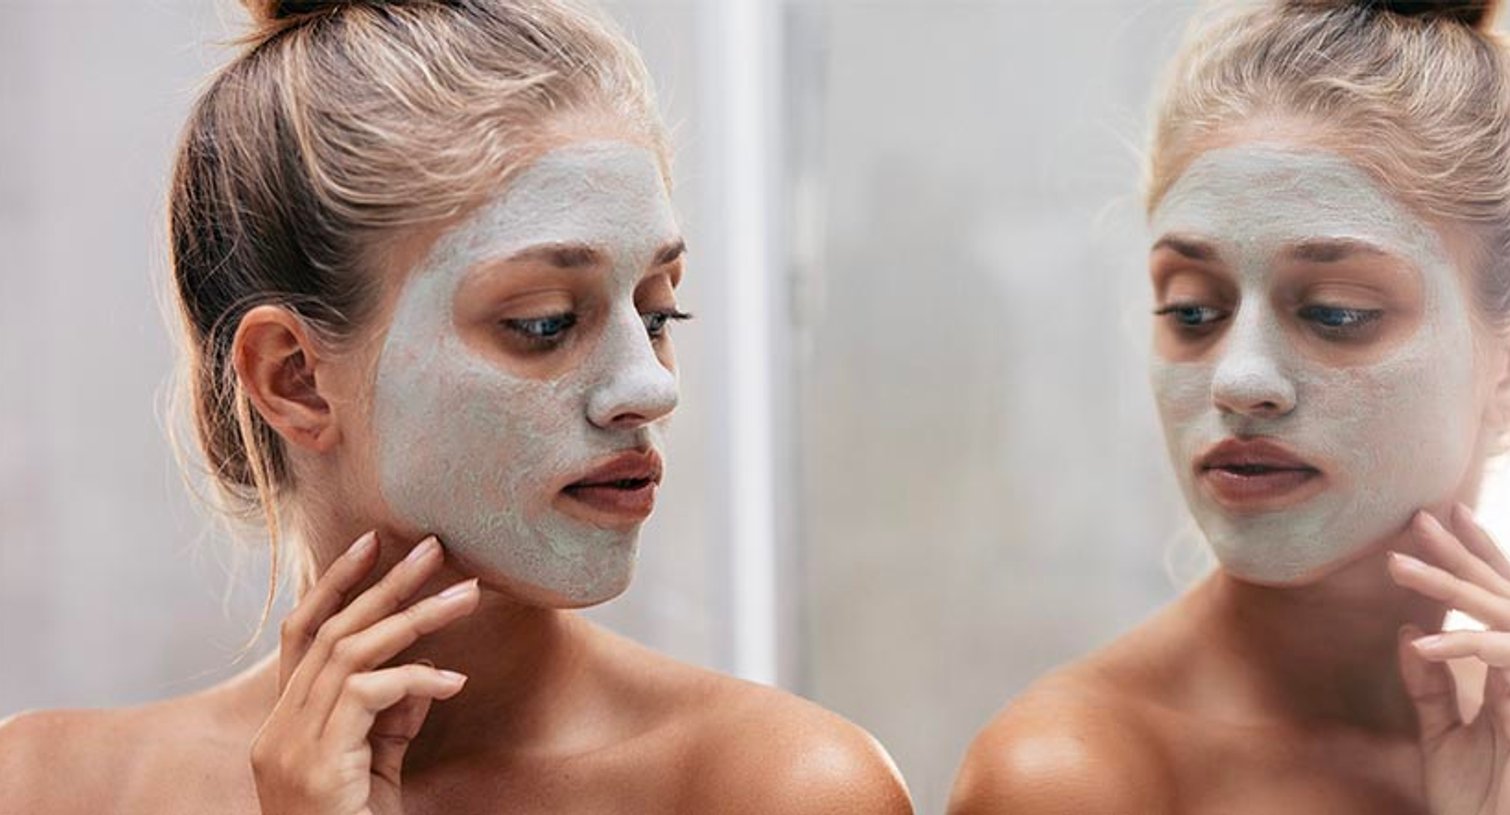 Loreal Paris BMAG Slideshow 10 Ways To Help Keep Your Skin Looking Healthy This Summer SLIDE 5